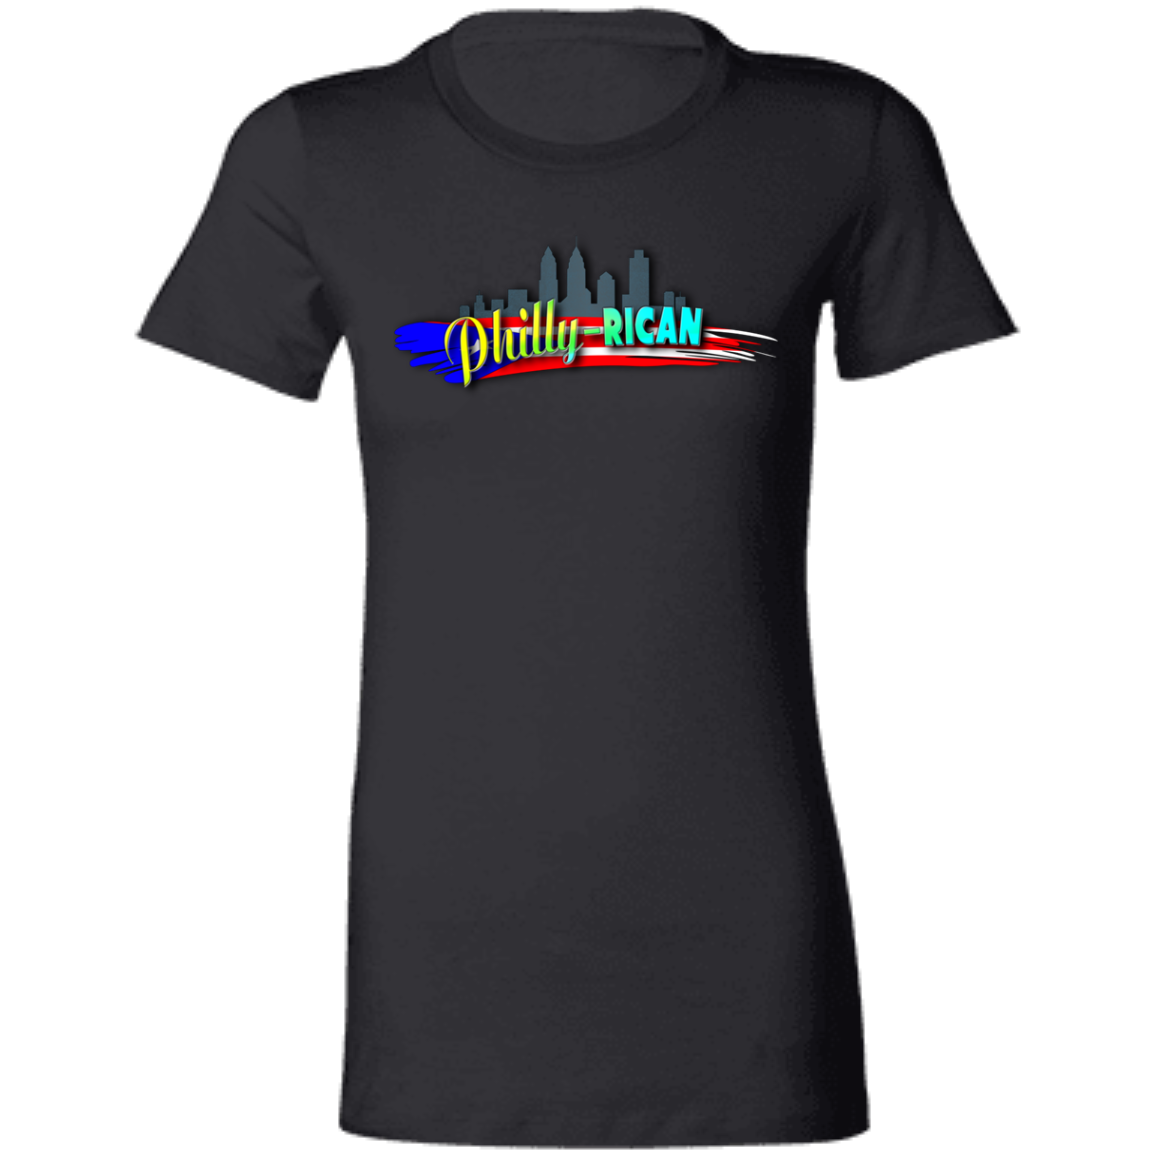 Philly-Rican Ladies' Favorite T-Shirt - Puerto Rican Pride